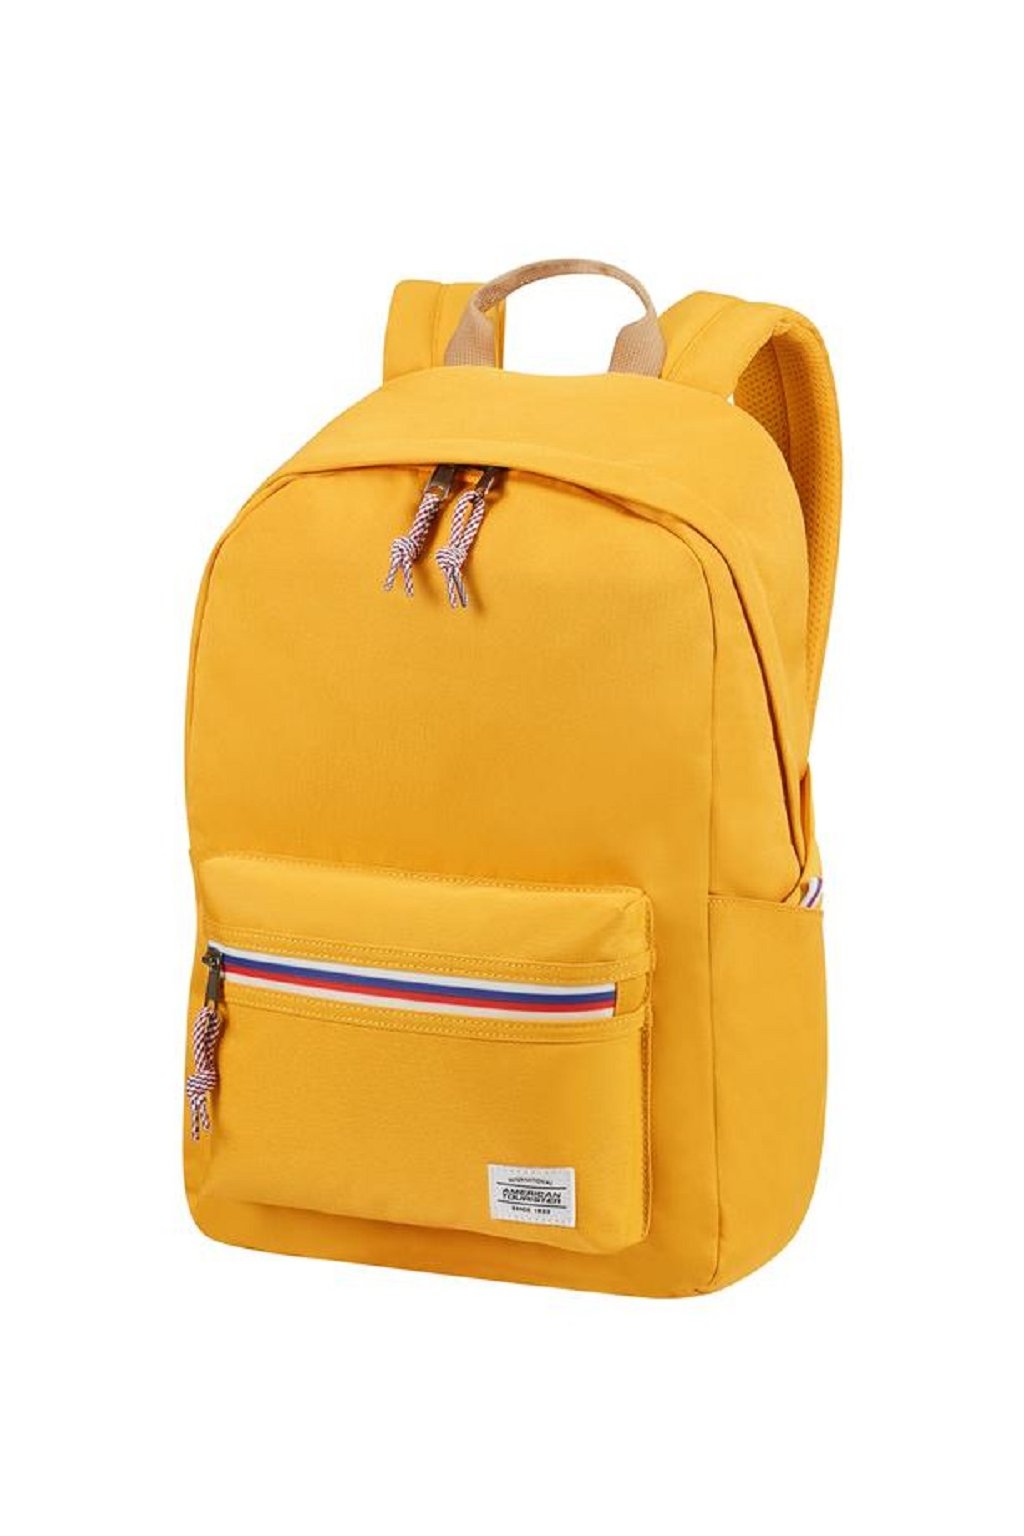 kufrland americantourister upbeat backpackzip yellow (5)